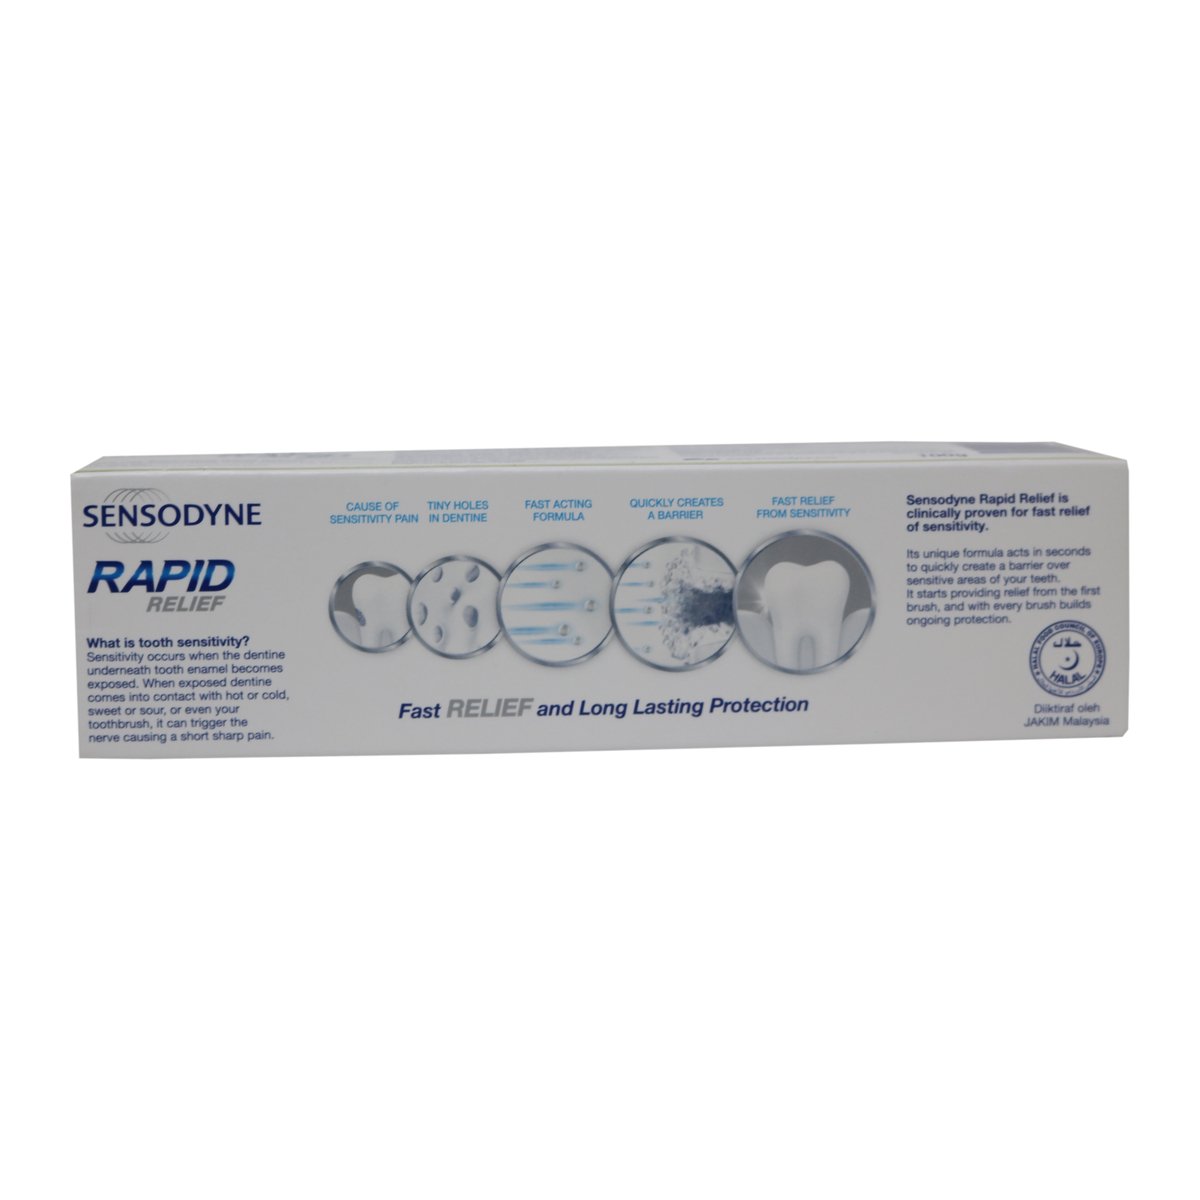 Sensodyne Tooth Paste Rapid Relief Whitening 100g